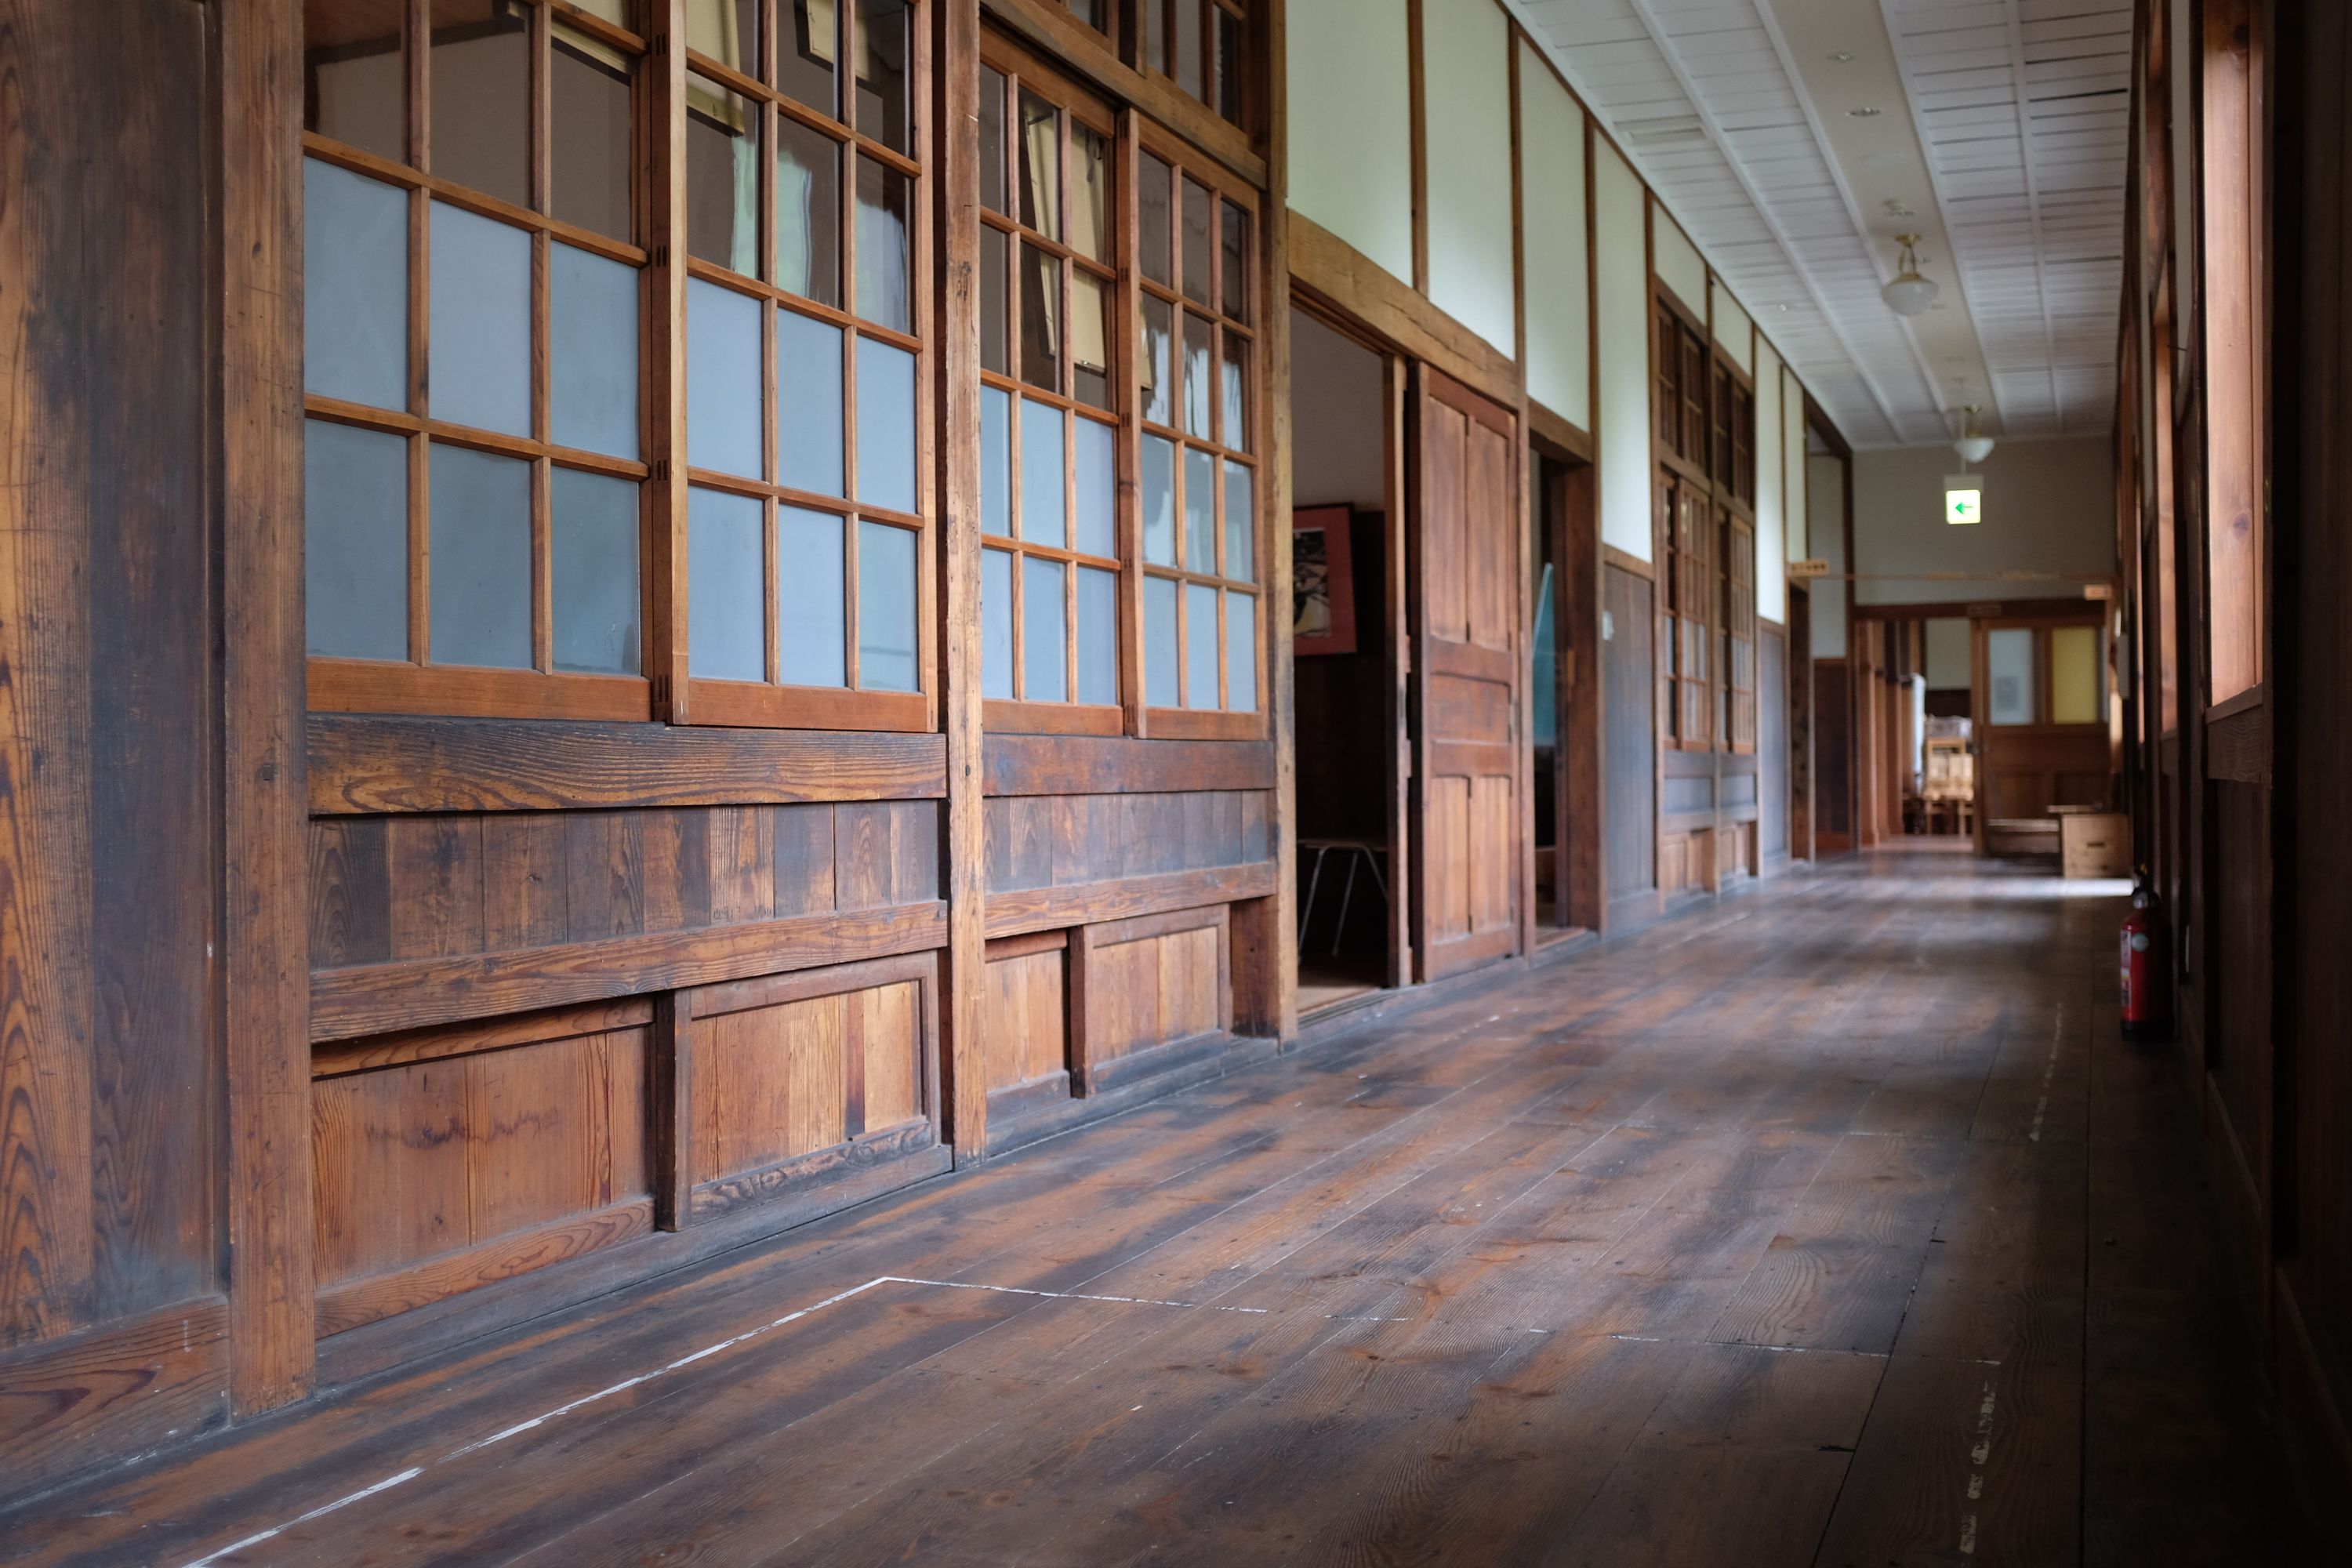 Hallway of a Japanese village school.